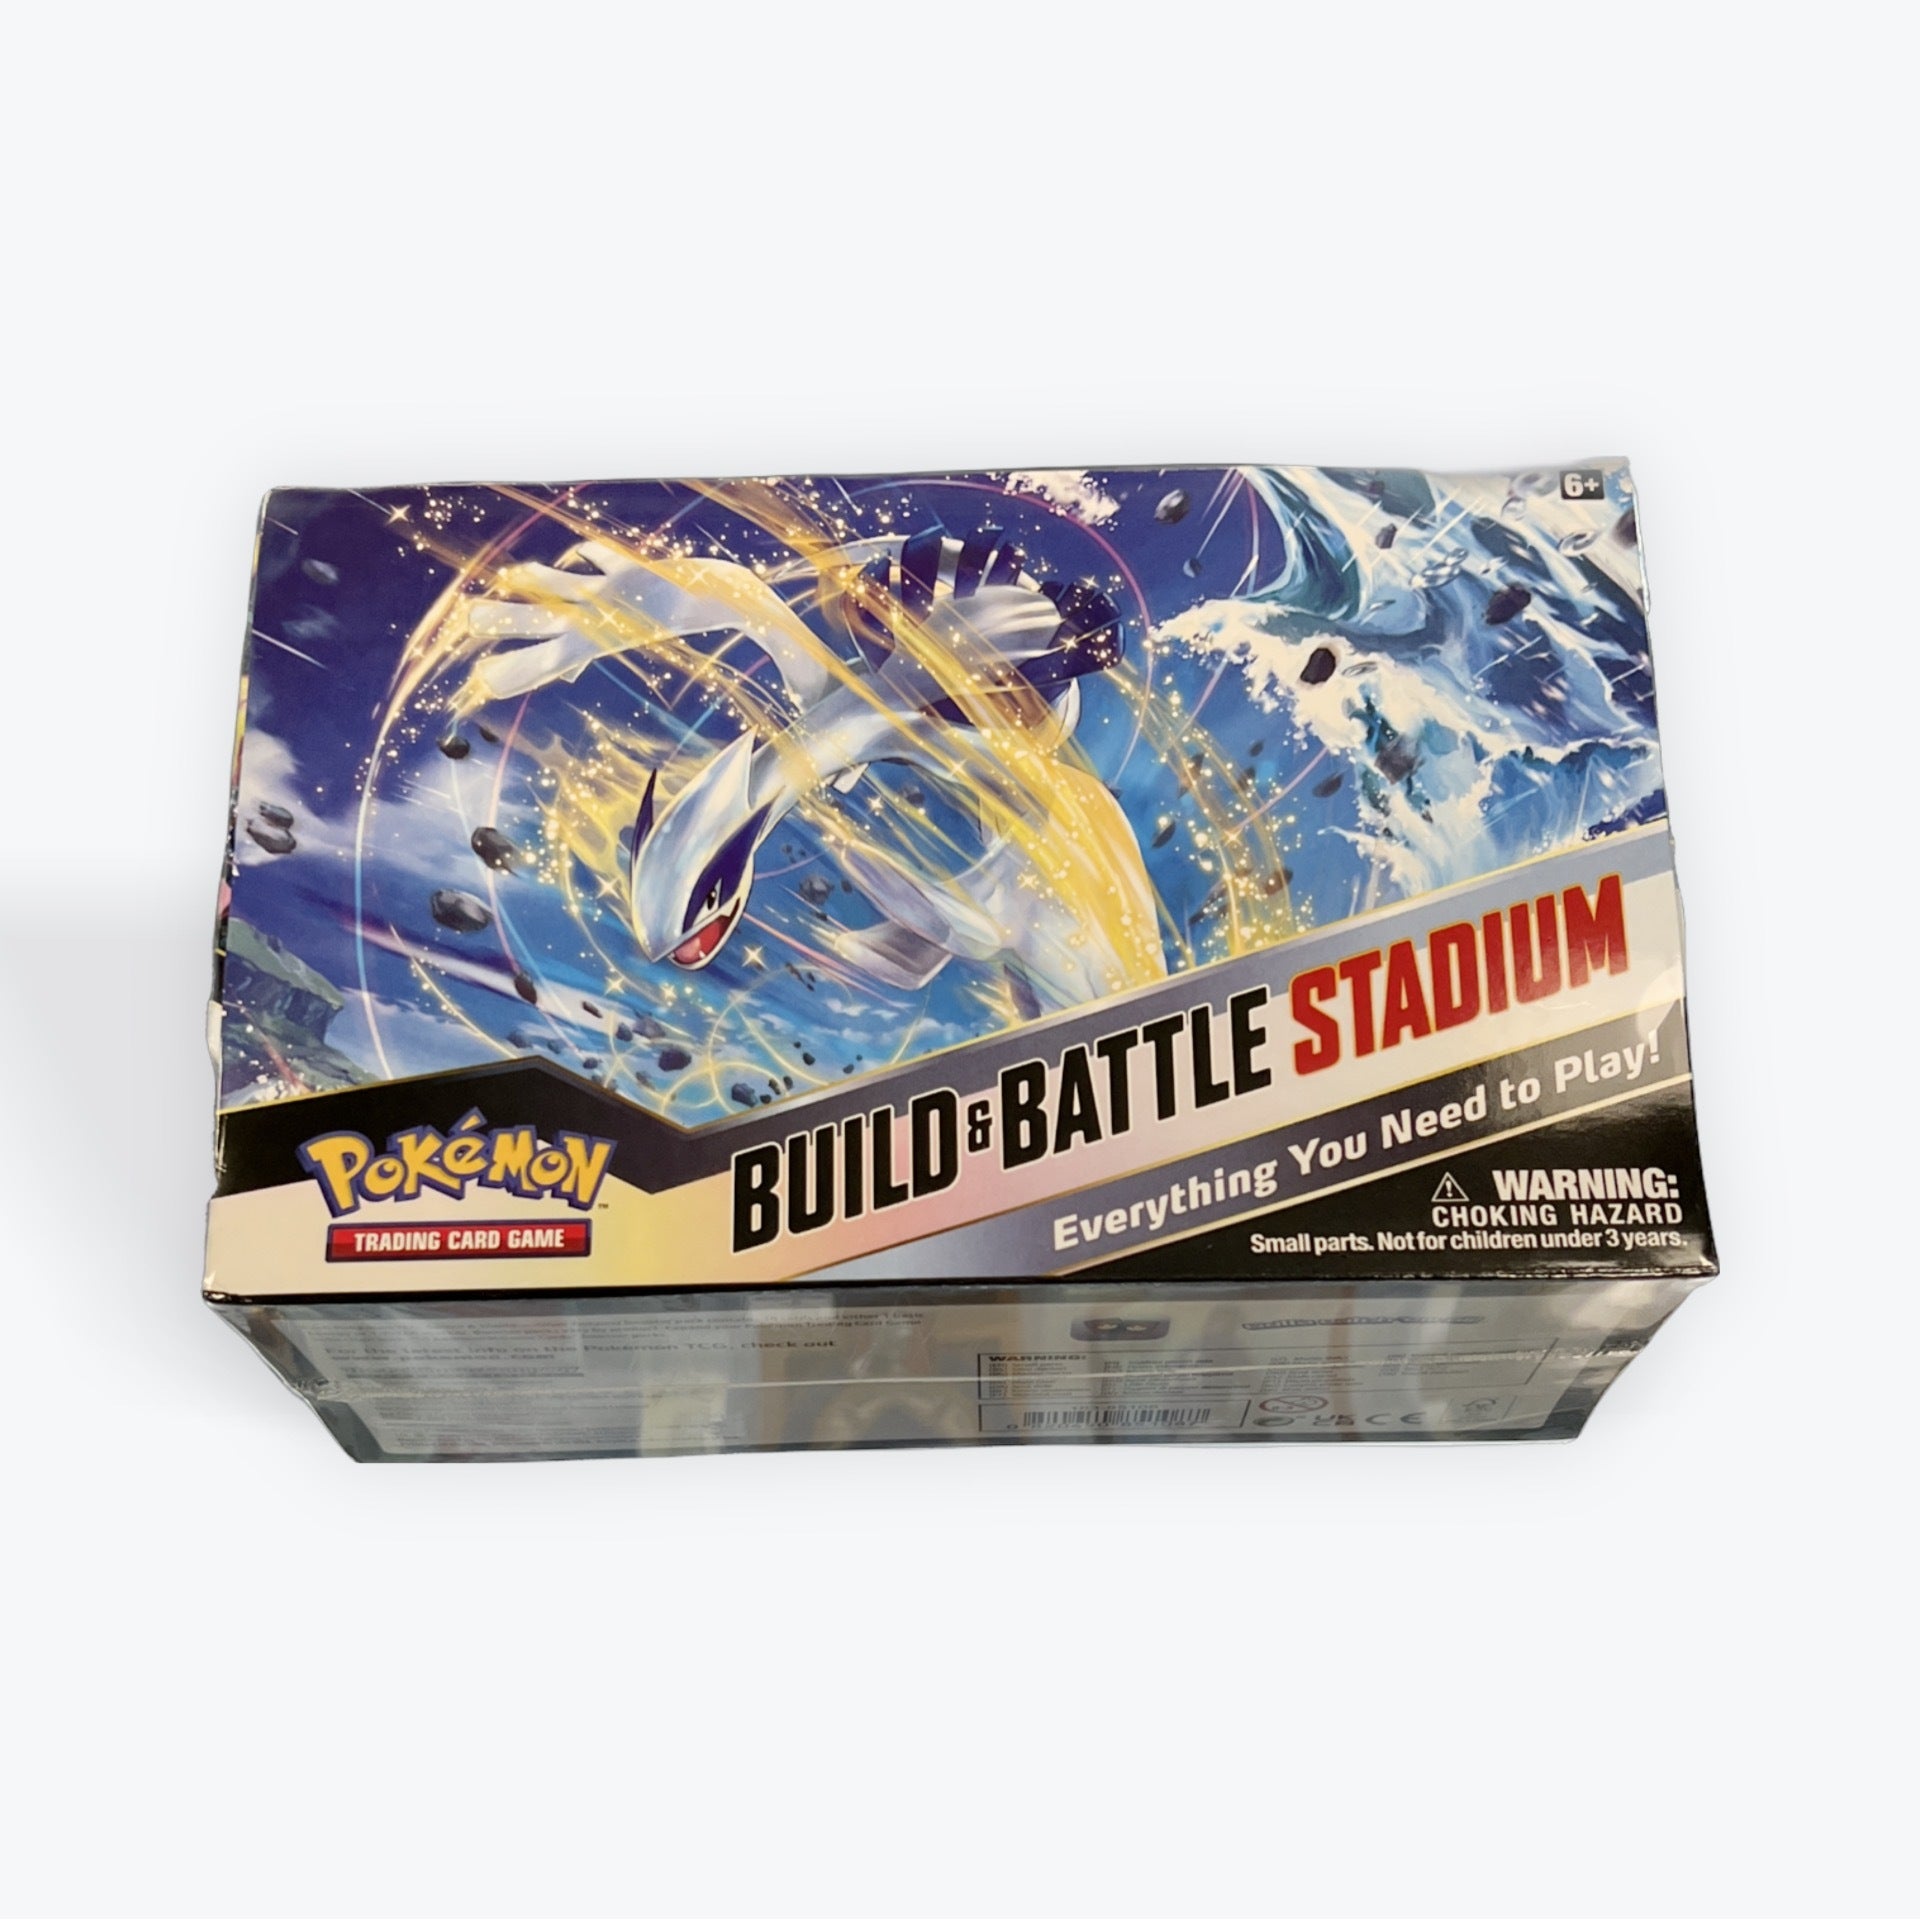 Pokémon Silver Tempest Build & Battle Stadium Box